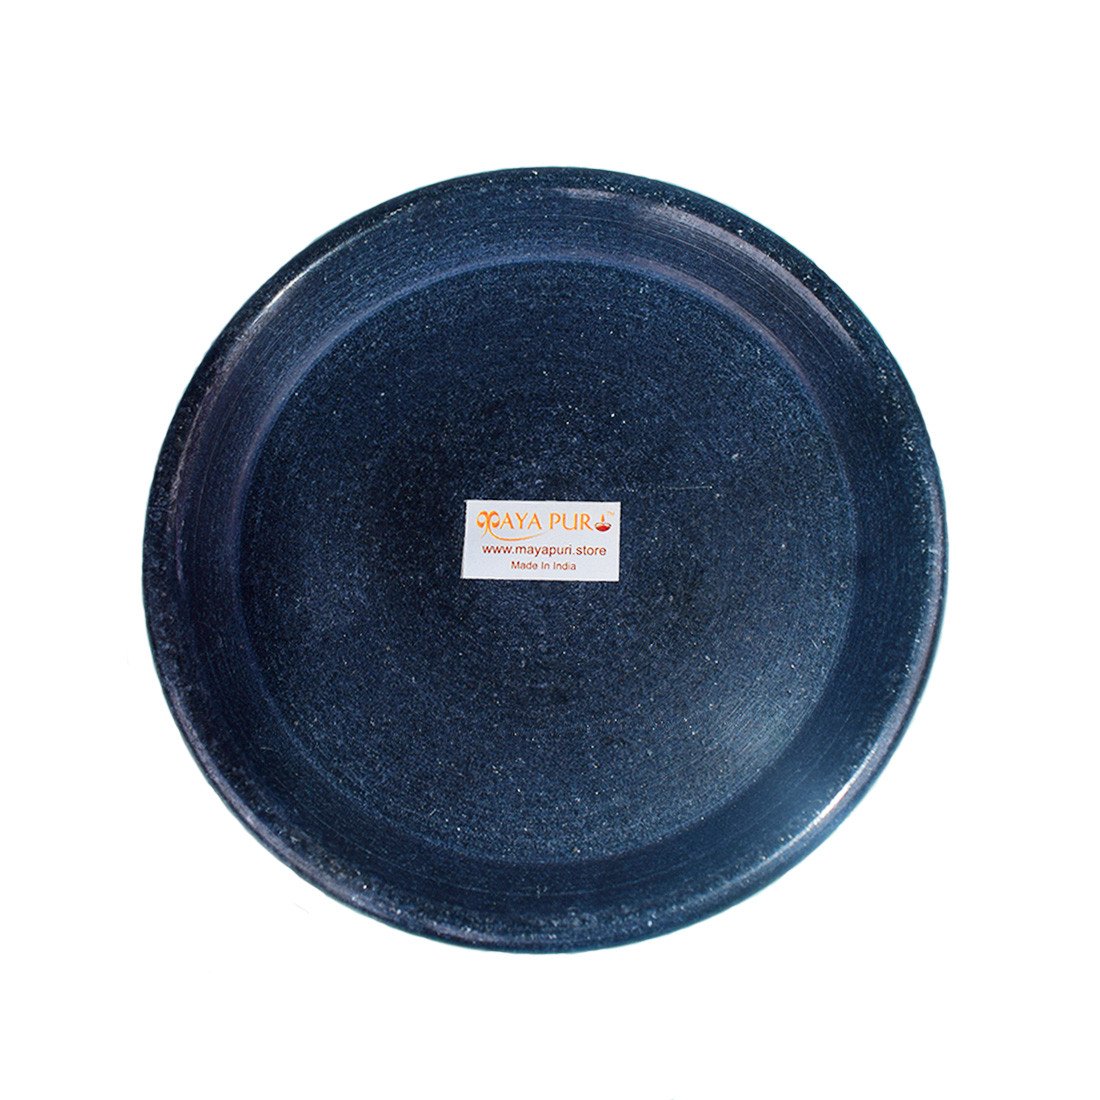 Marbel Plate for Puja Abhishek | Black Pooja Stone Plate, Small, Dia: 4 inch